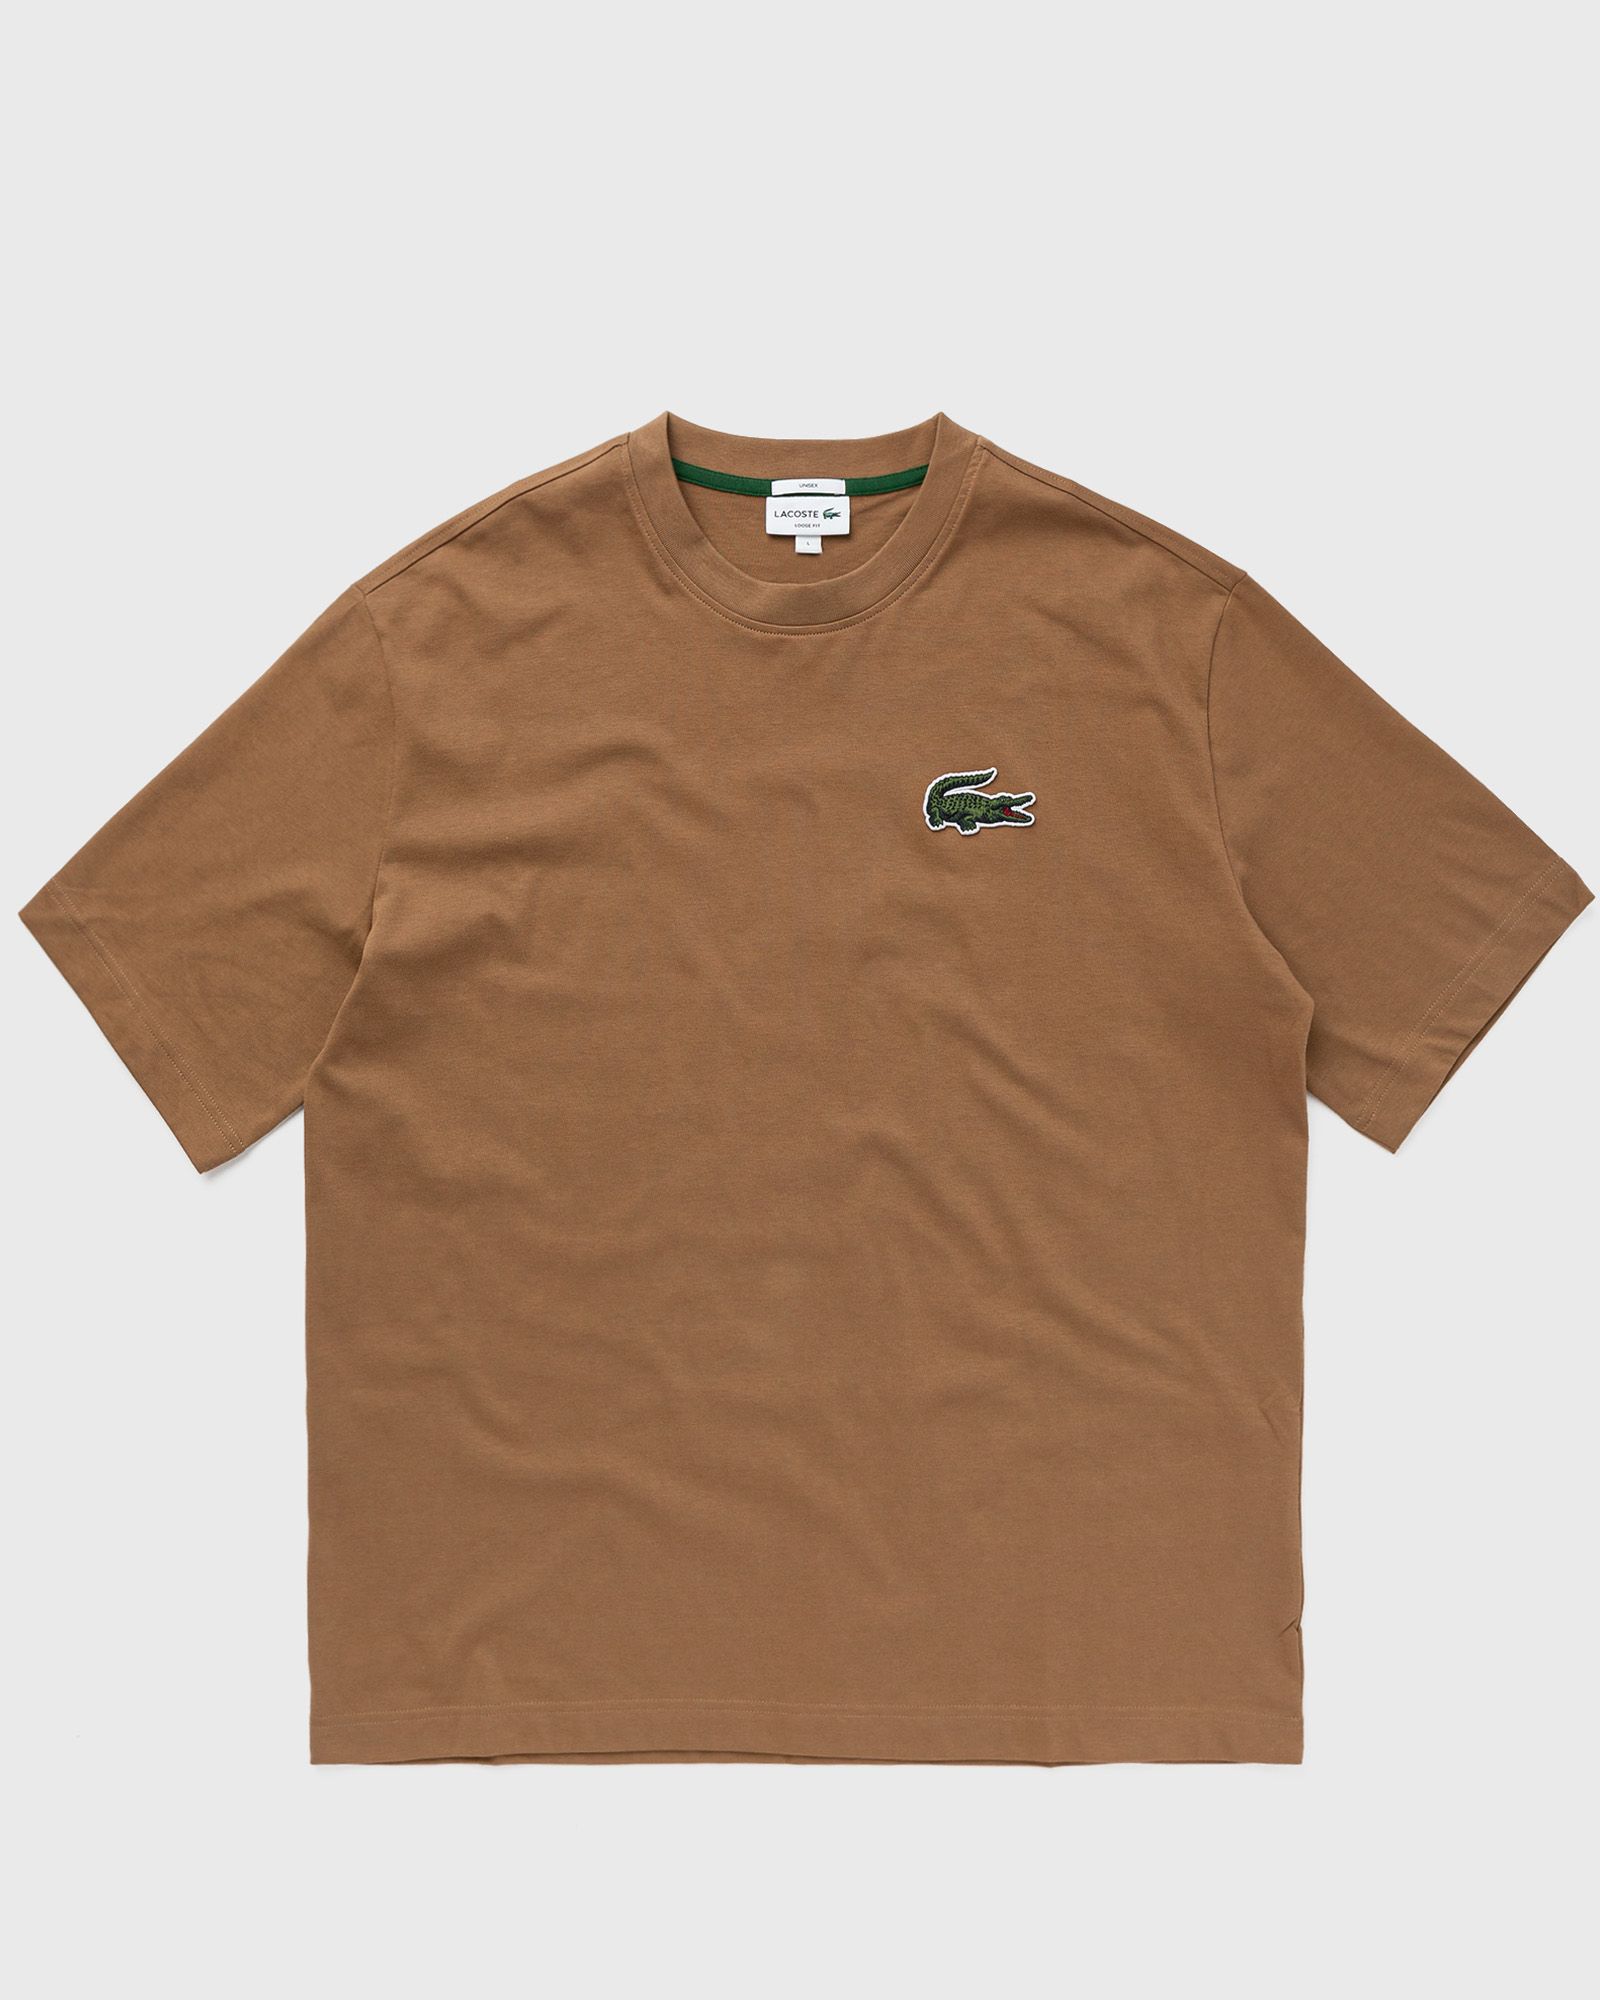 Lacoste - t-shirt men shortsleeves brown in größe:s